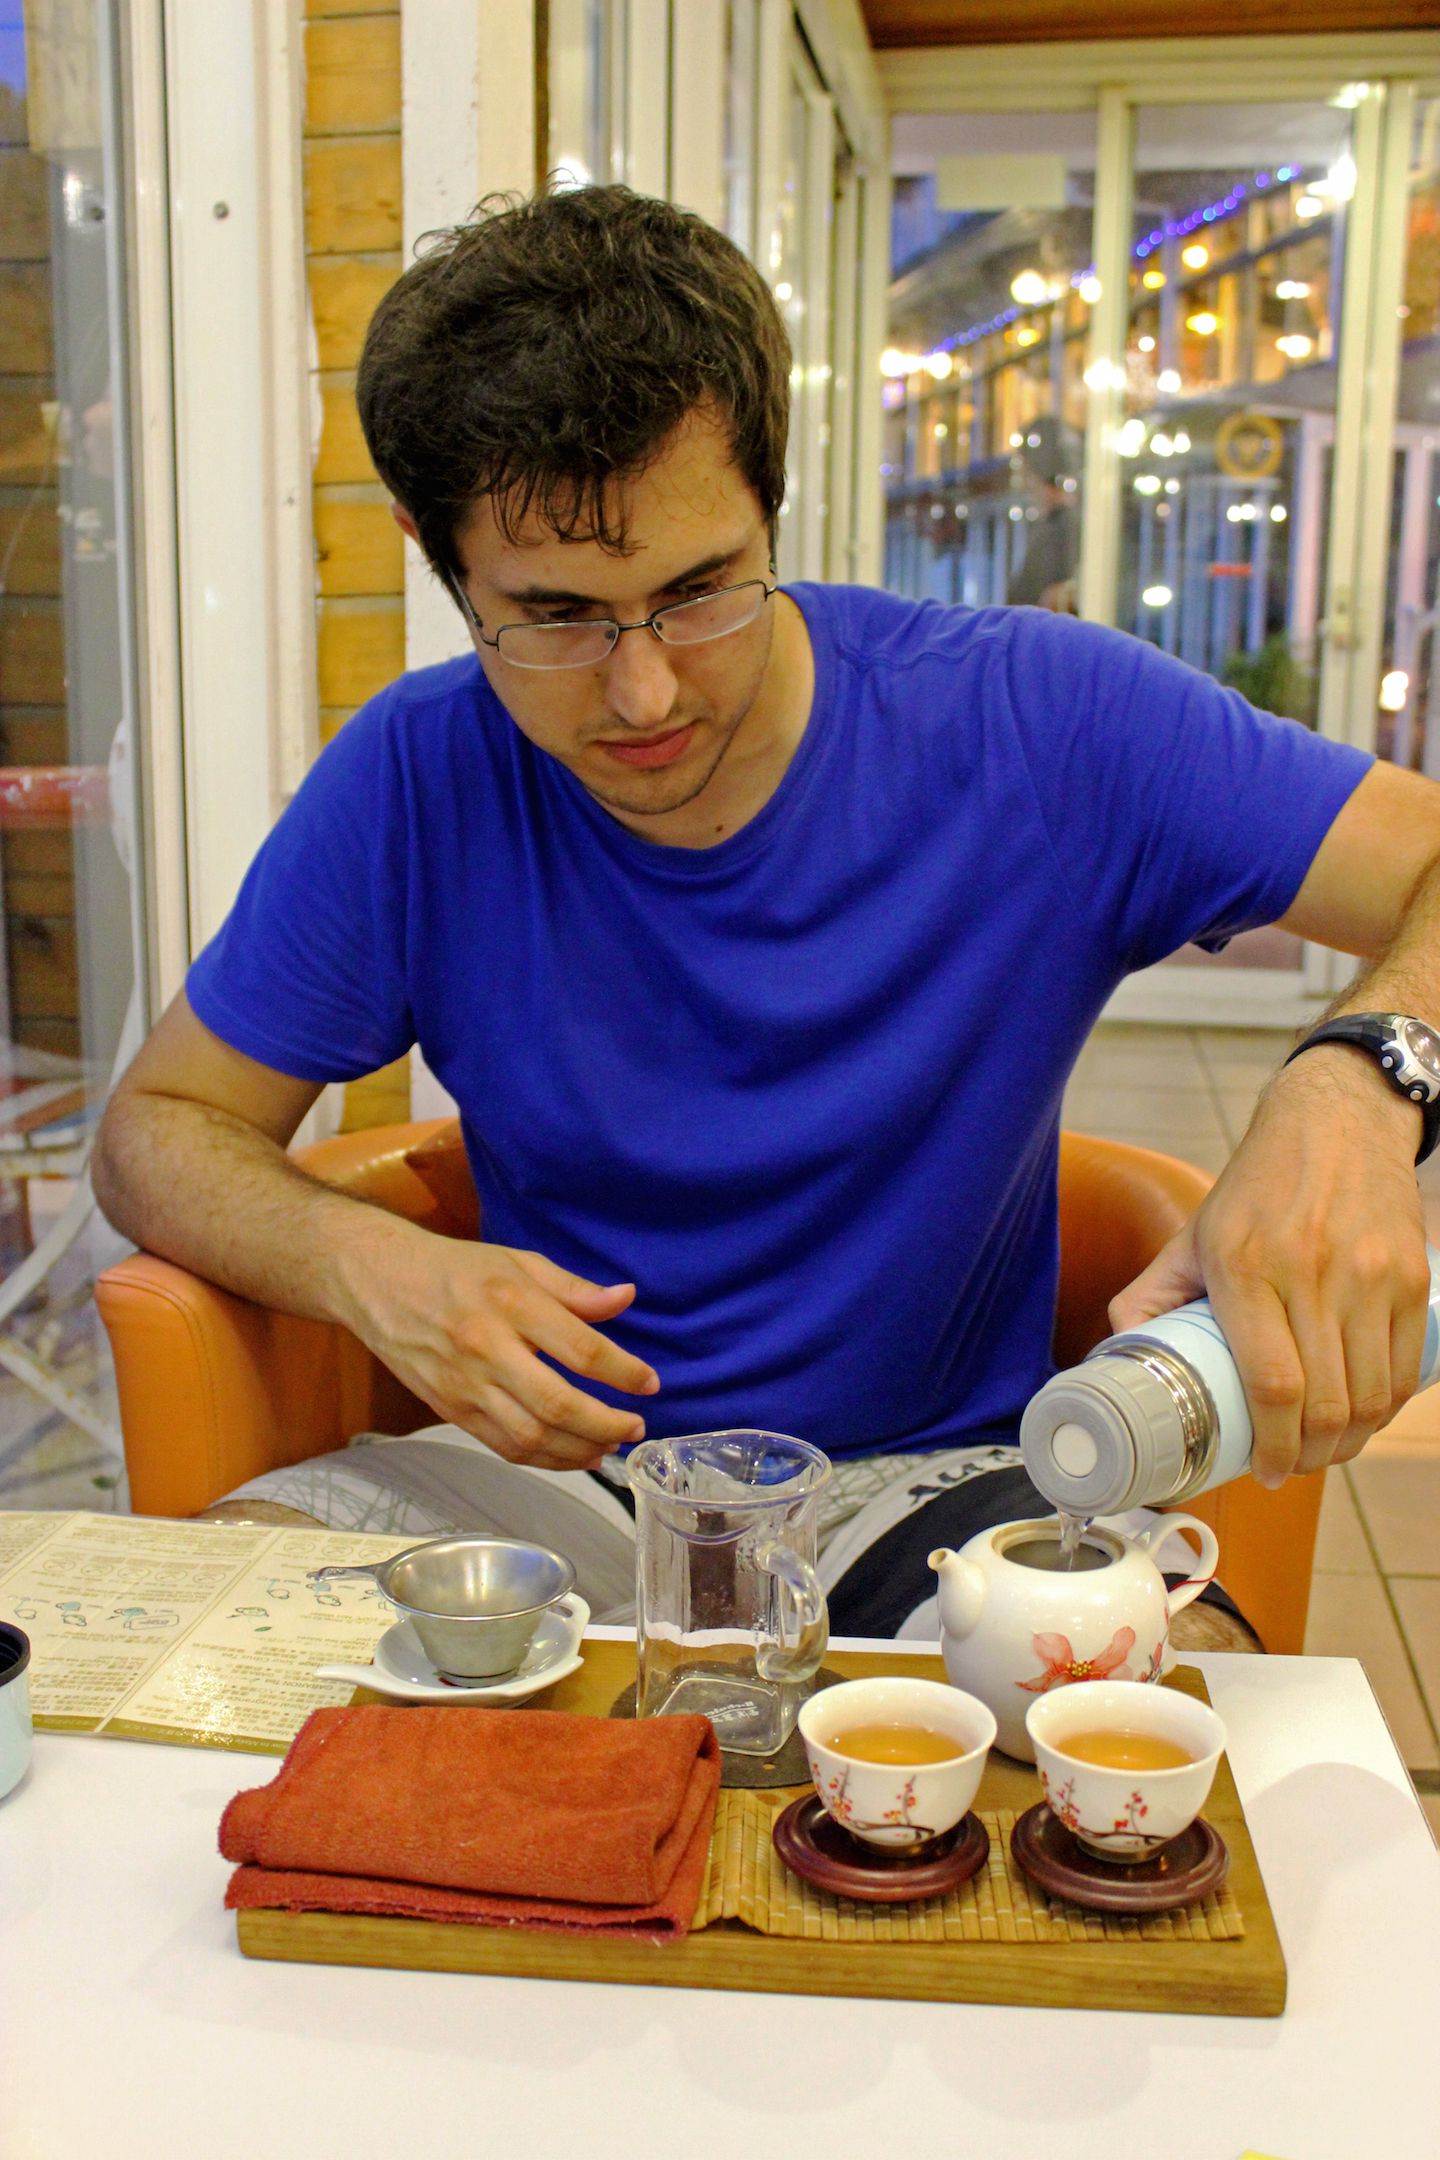 Carlos making some tea, Taipei, Taiwan